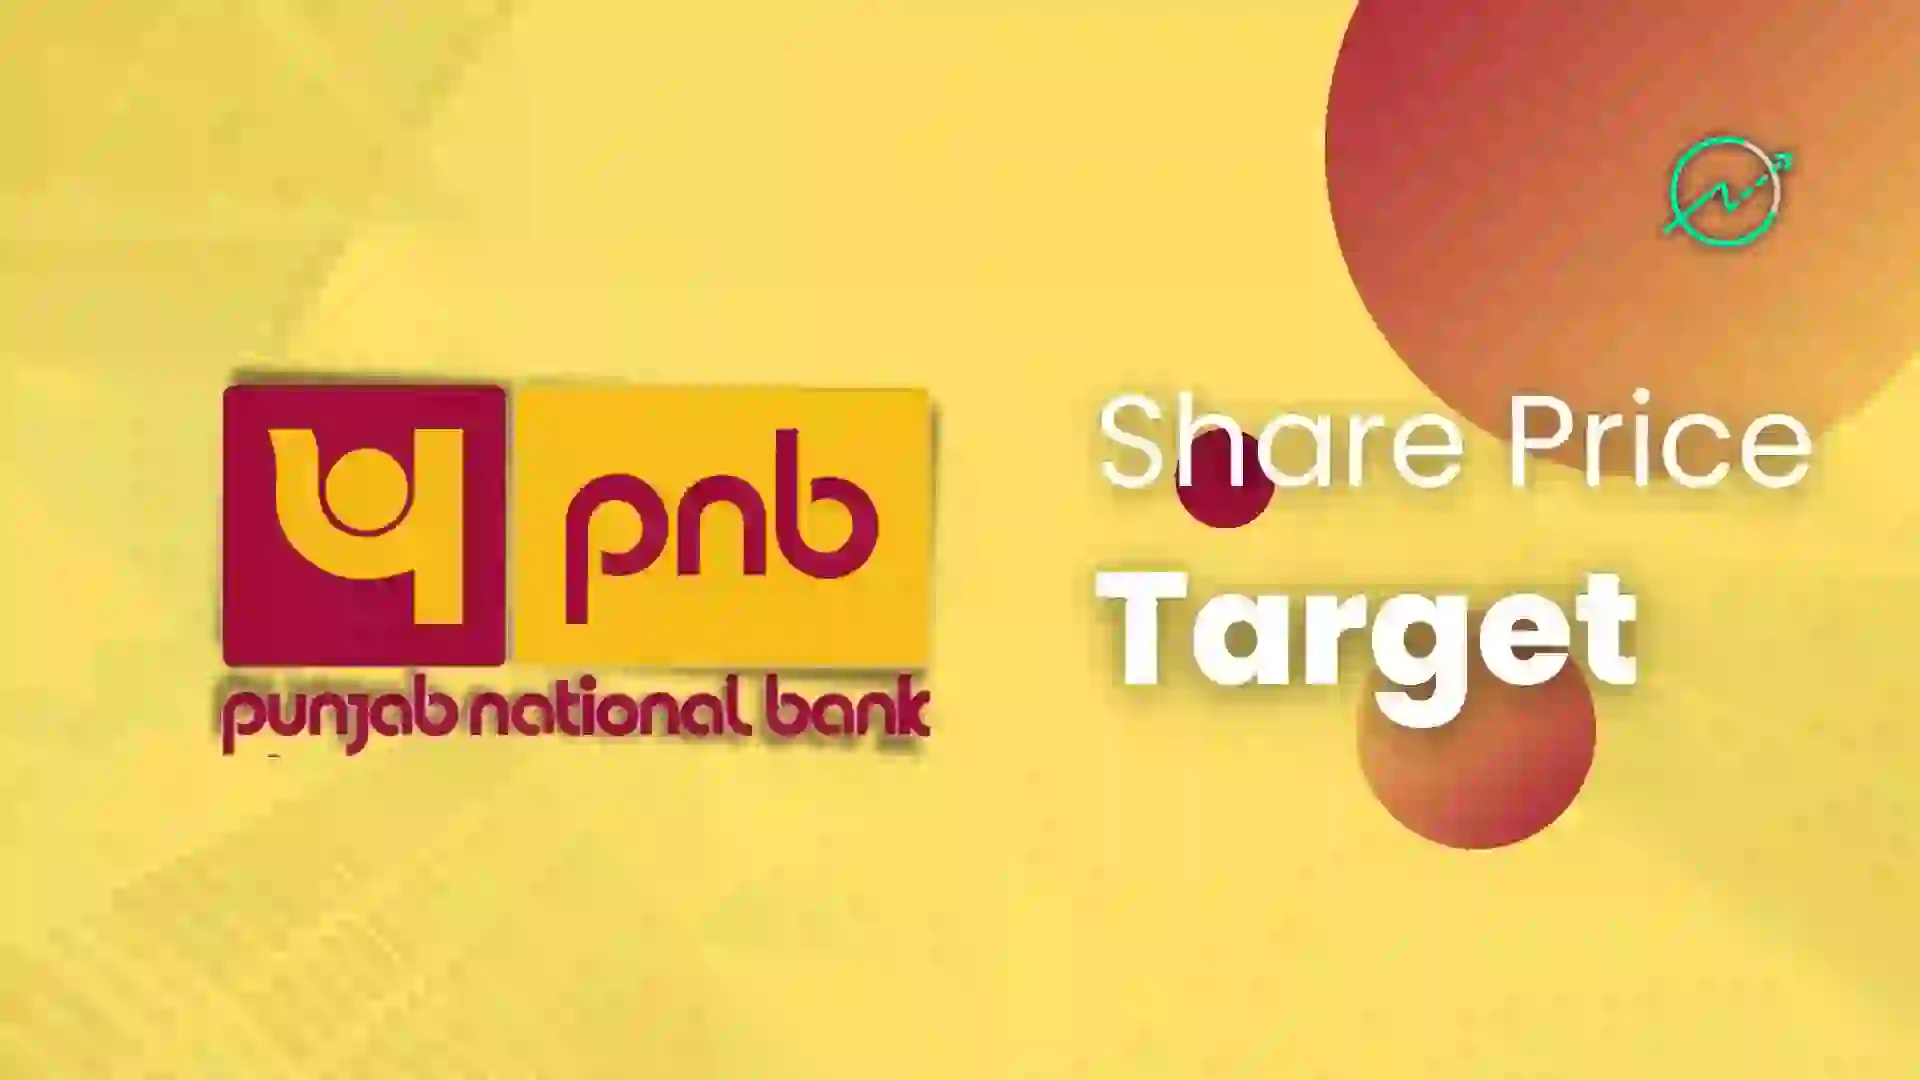 PNB Share Price Target 2023, 2024, 2025, 2026, 2030